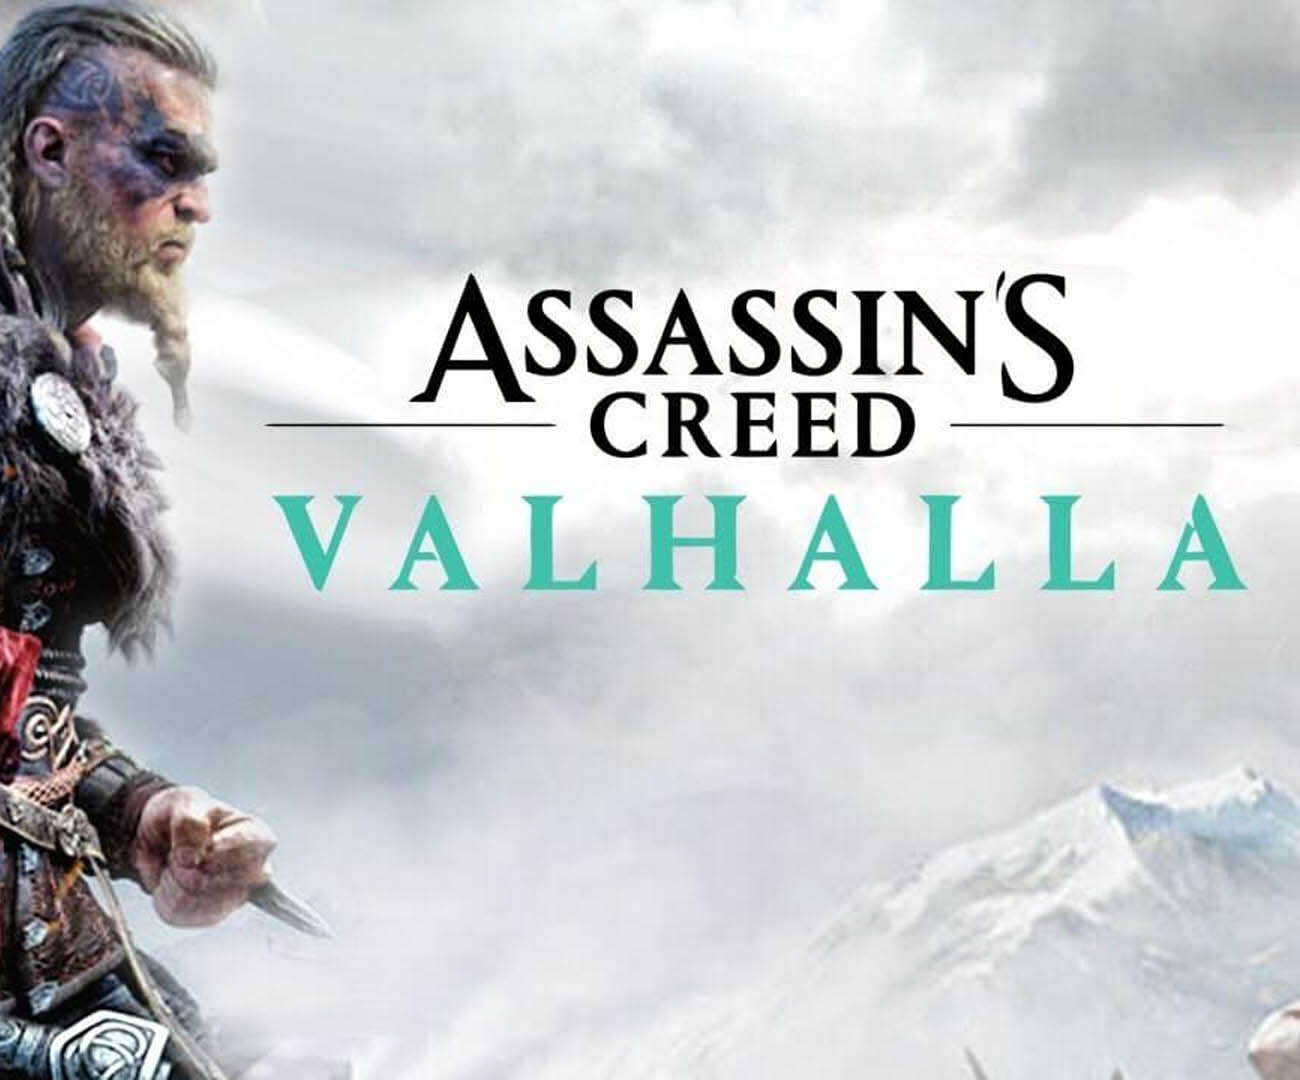 valhalla, assassin's creed, ubisoft